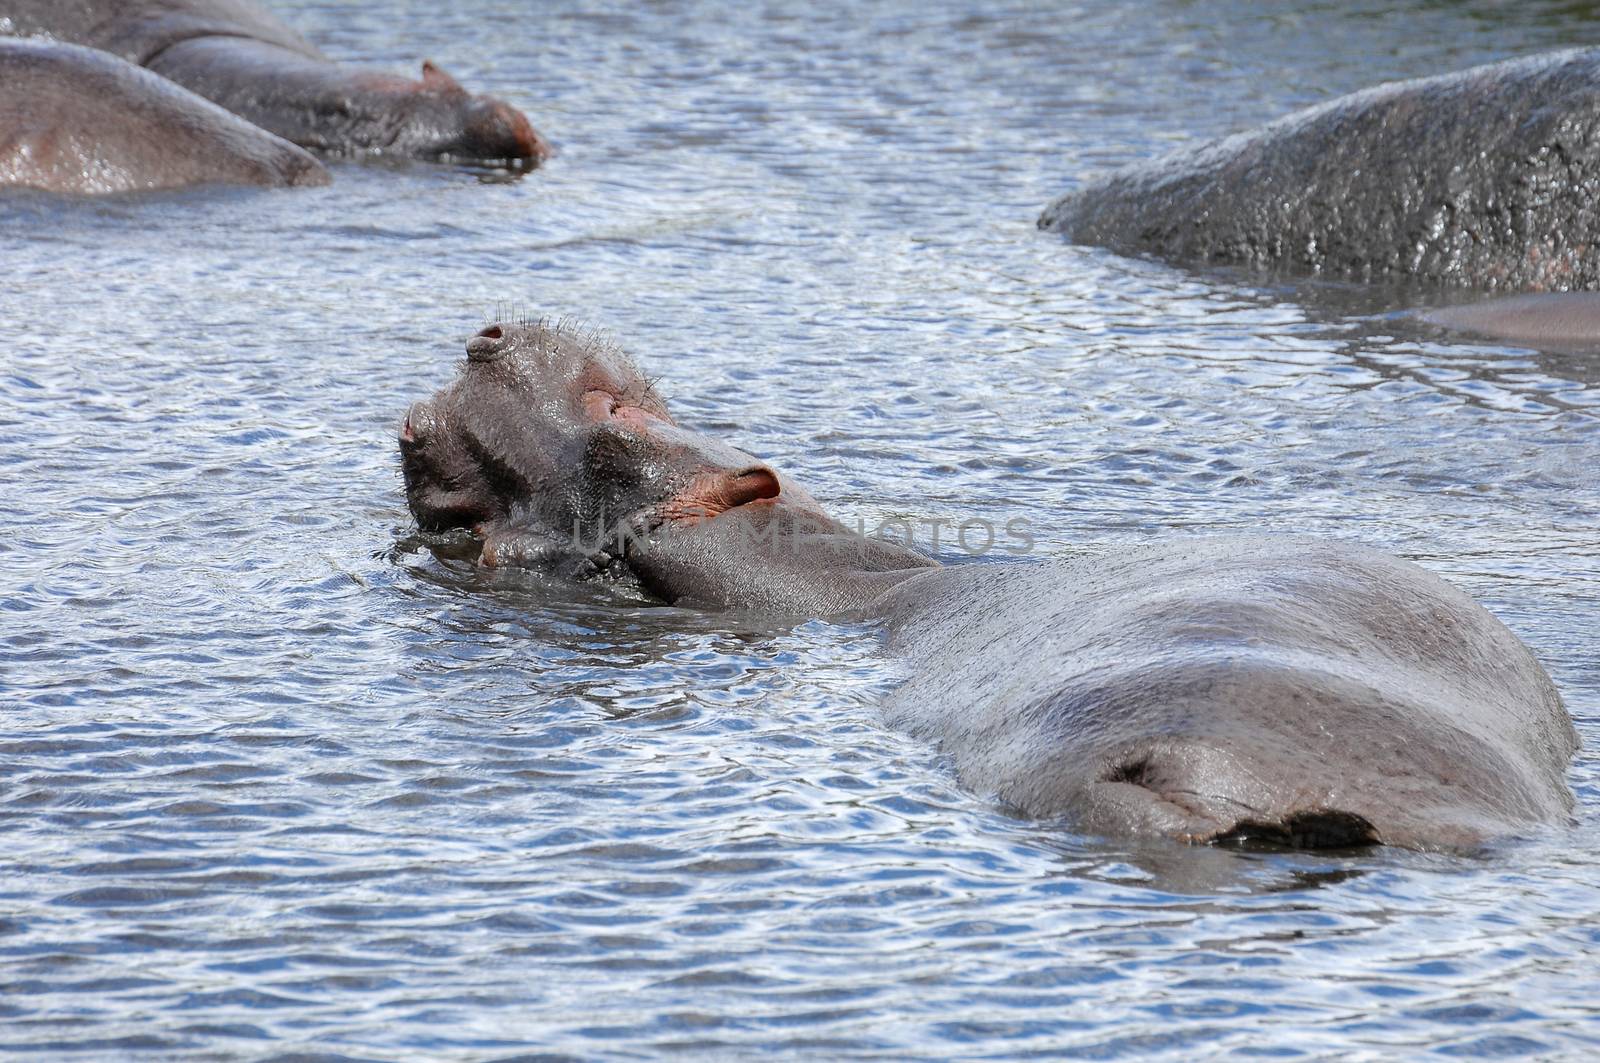 Hippo in national park Tanzania by moizhusein